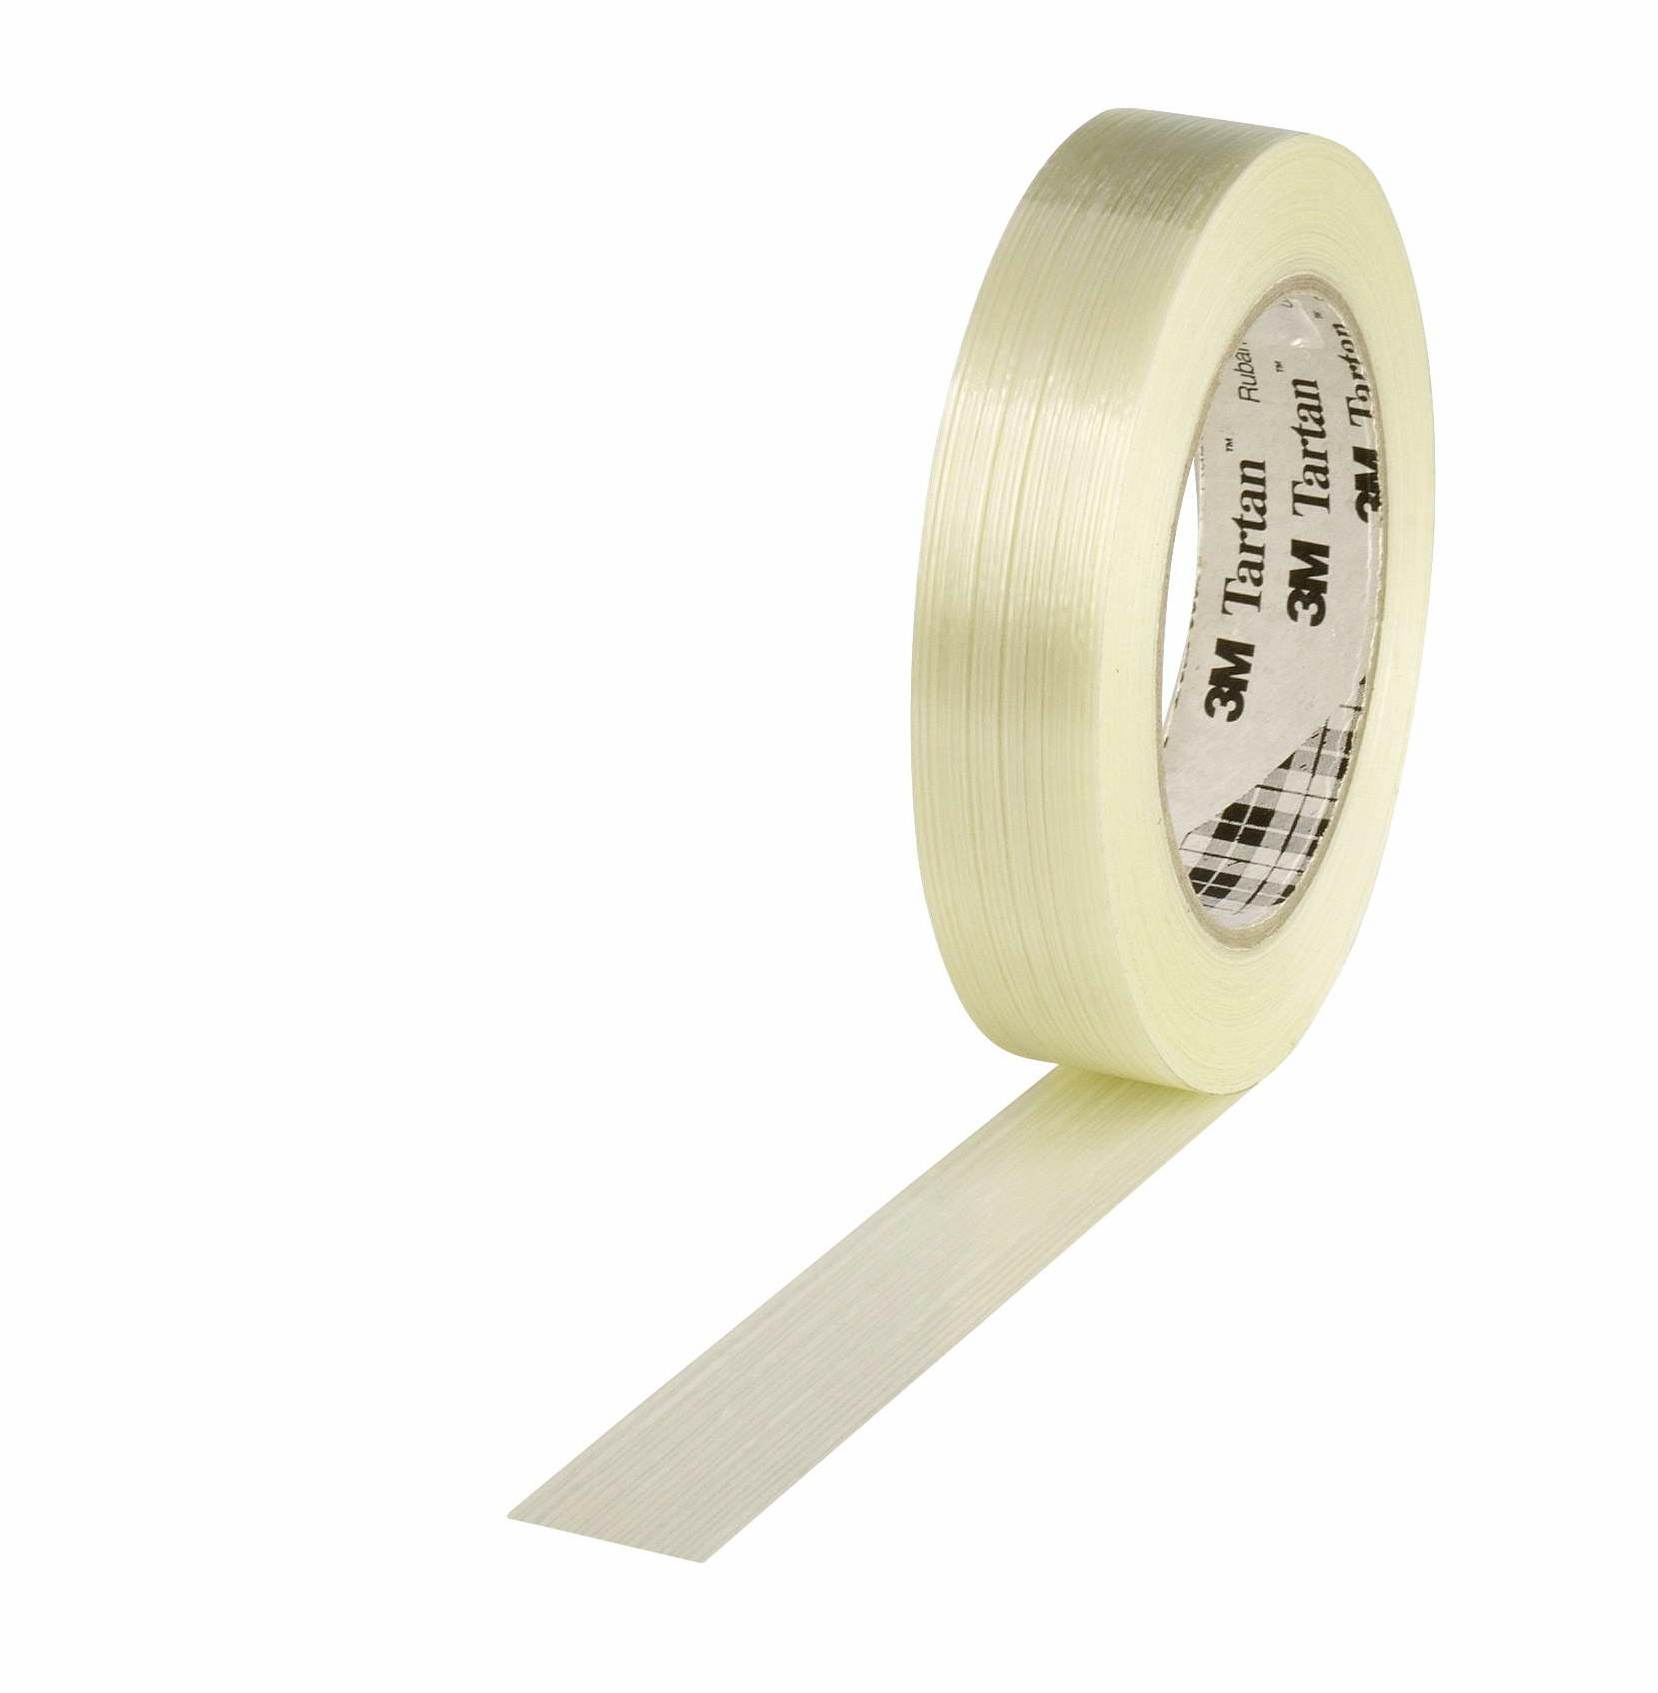 3M-Filamentband, 25mm breit